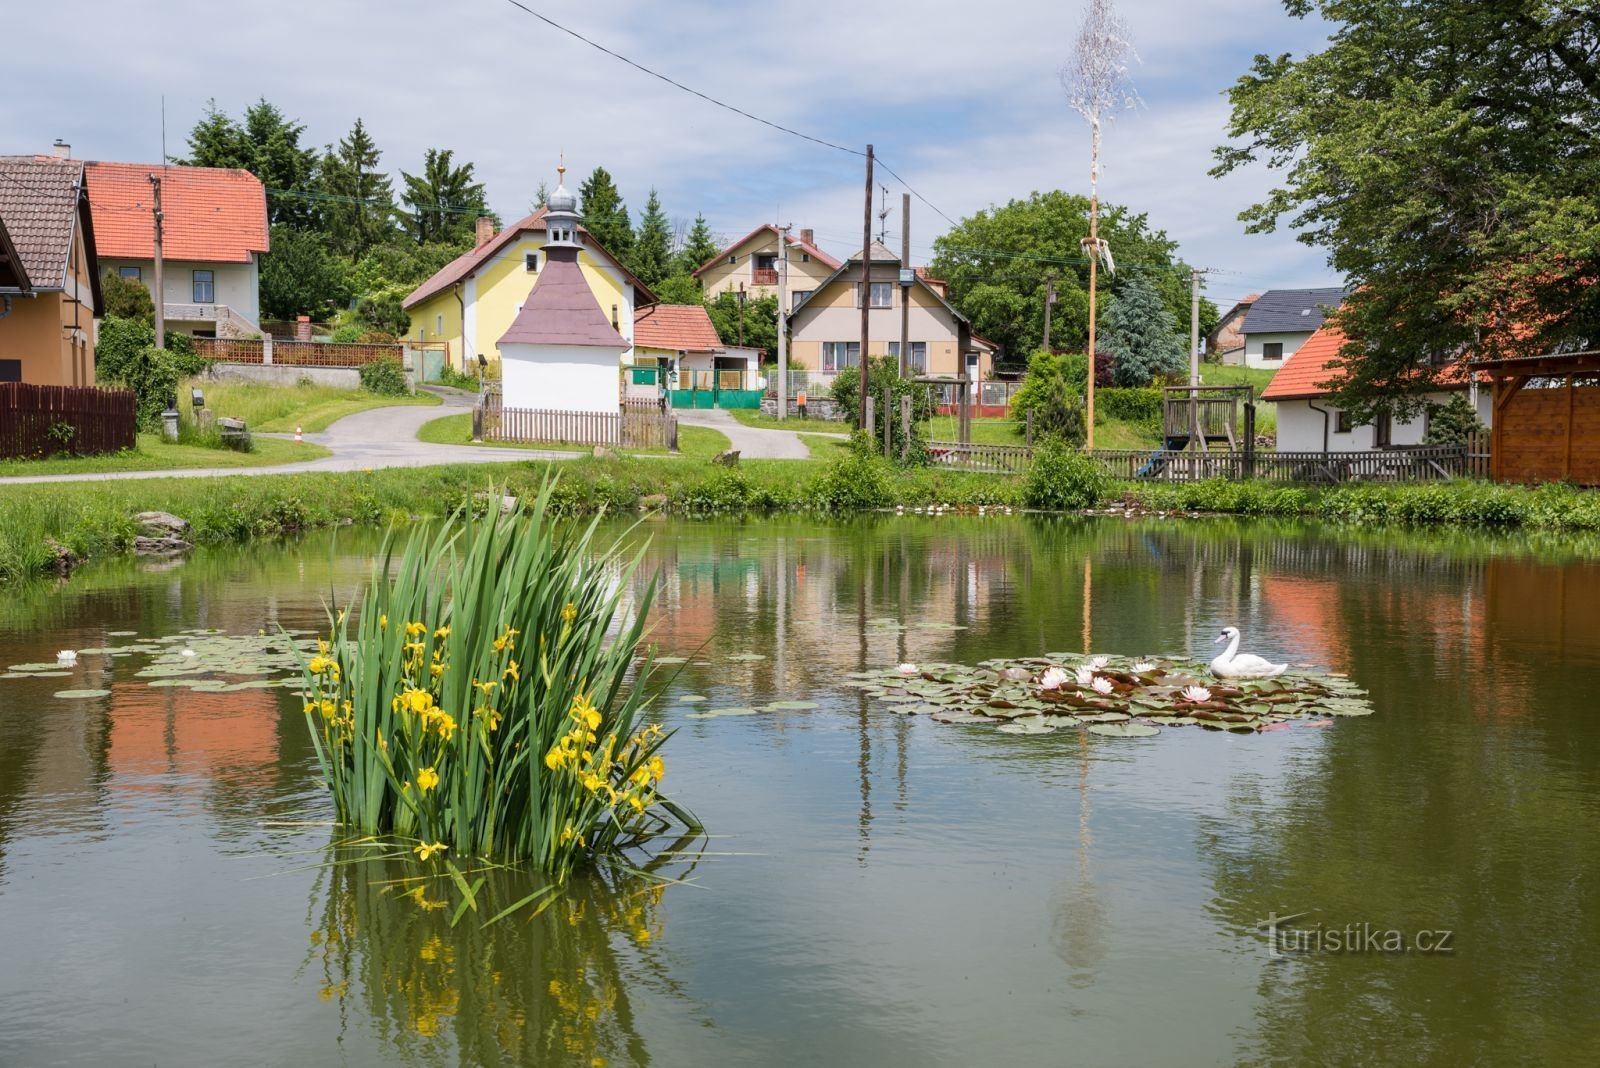 Semirreboque em Lažany. Foto: Antonín Kříž